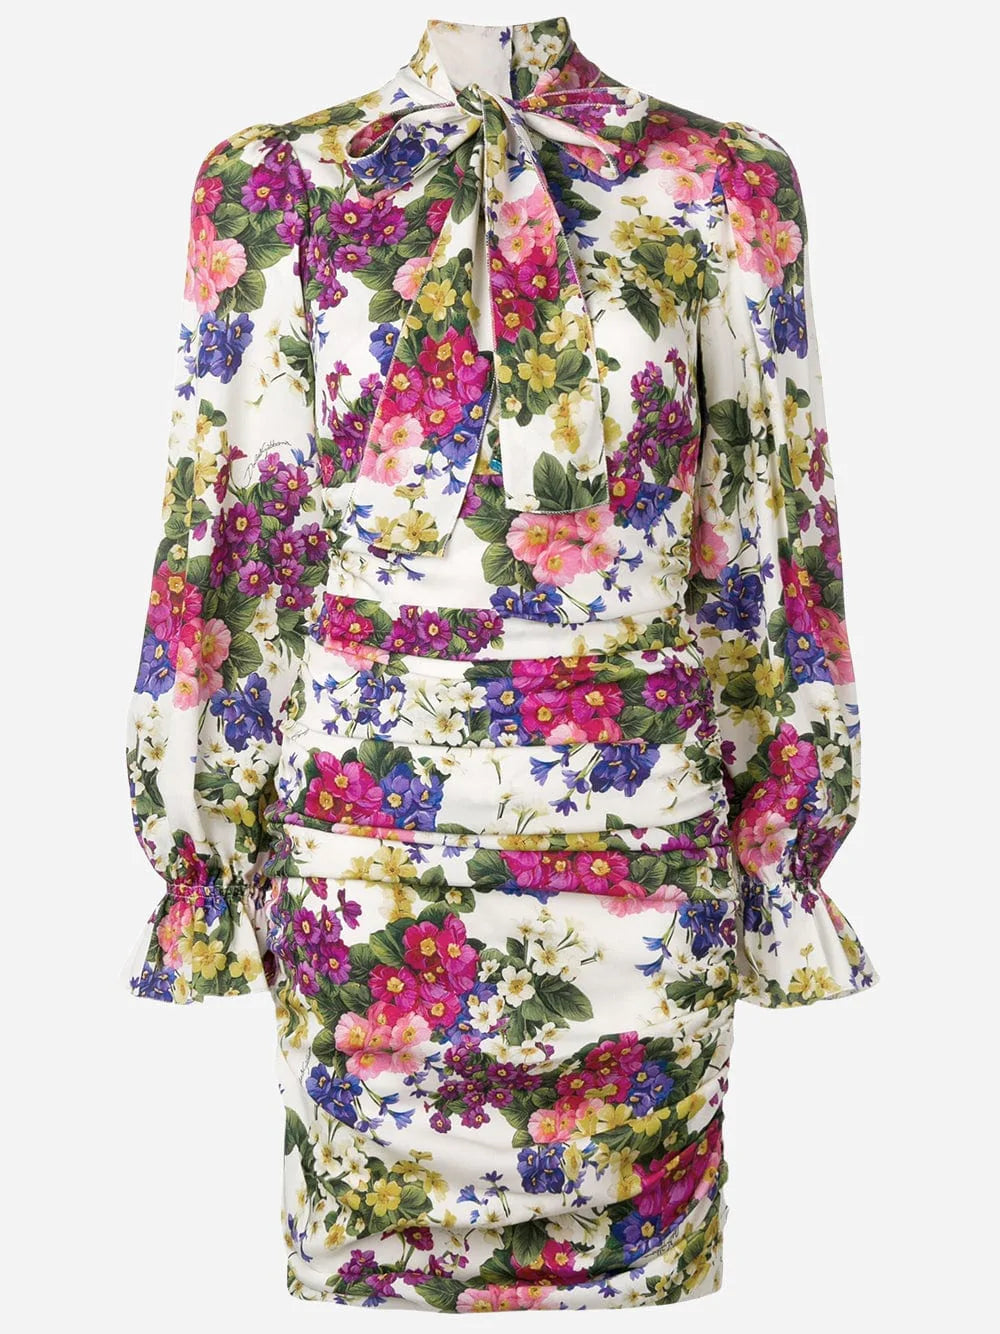 Dolce & Gabbana Floral-Print Mini Dress